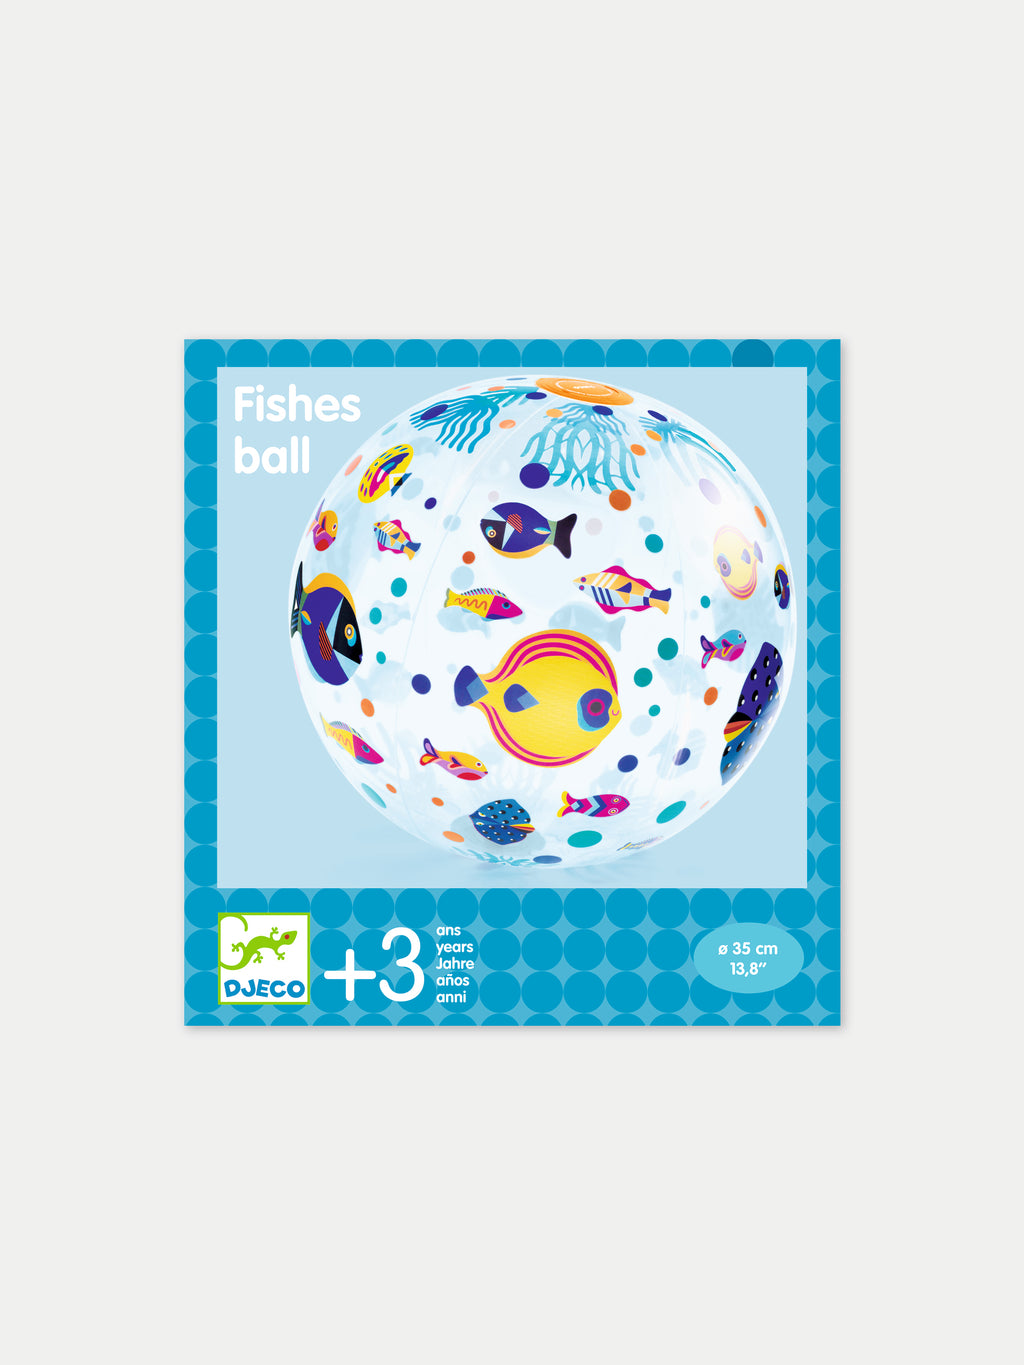 Transparent ball for kids